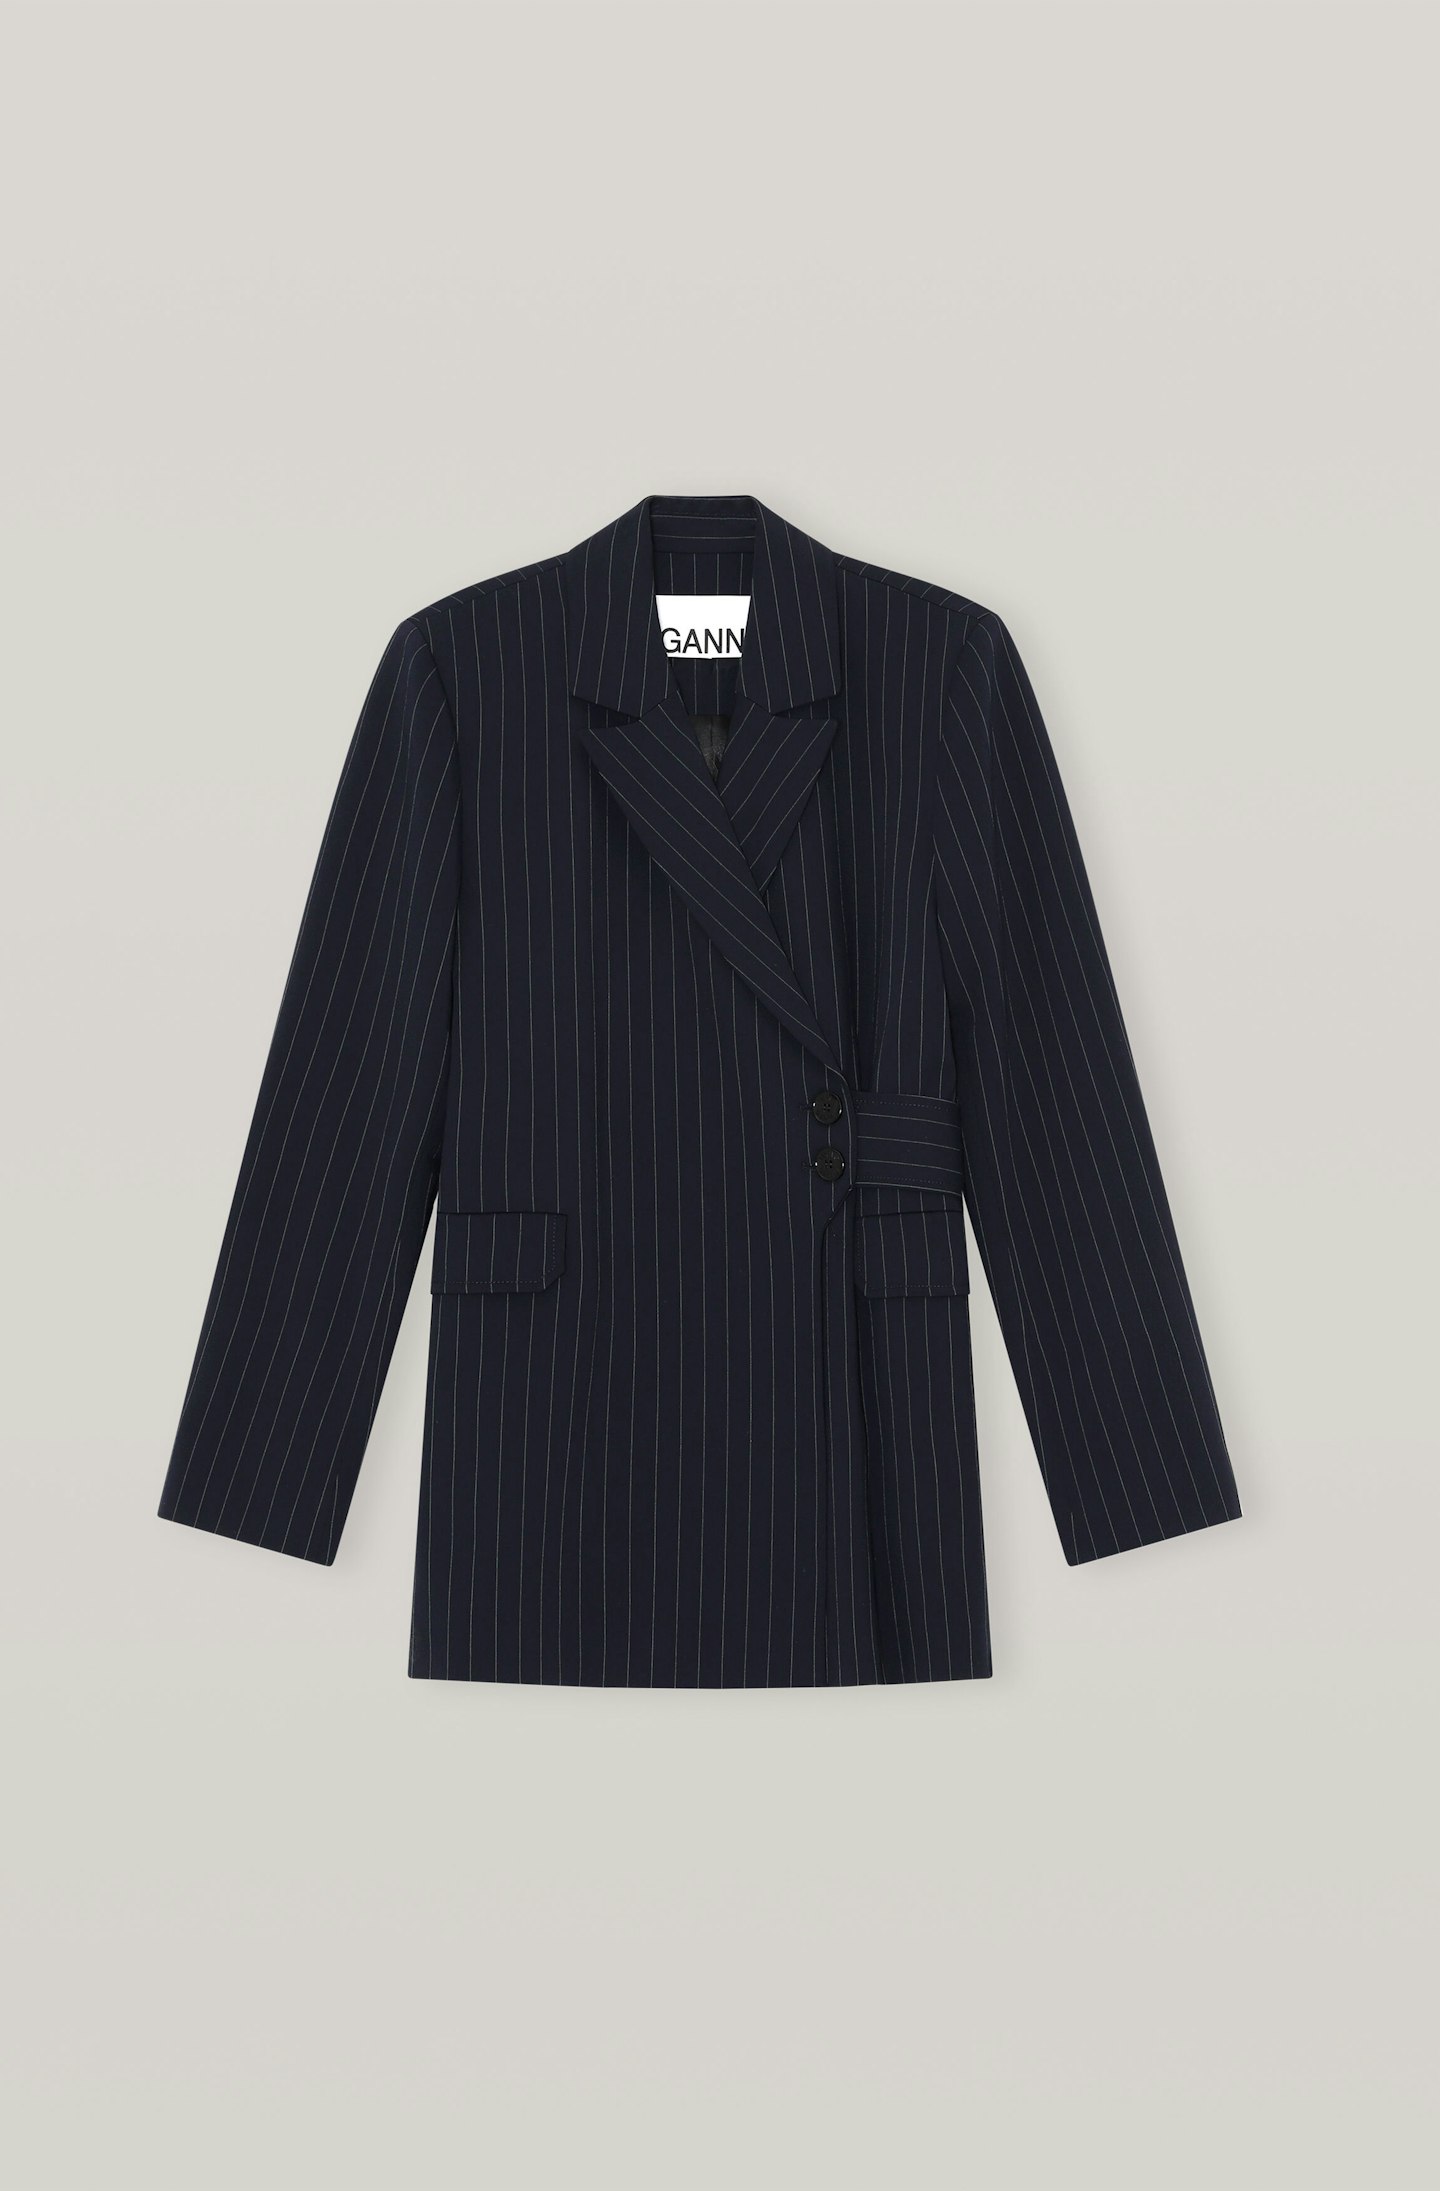 Ganni, Navy Pinstripe Suit Jacket, £325